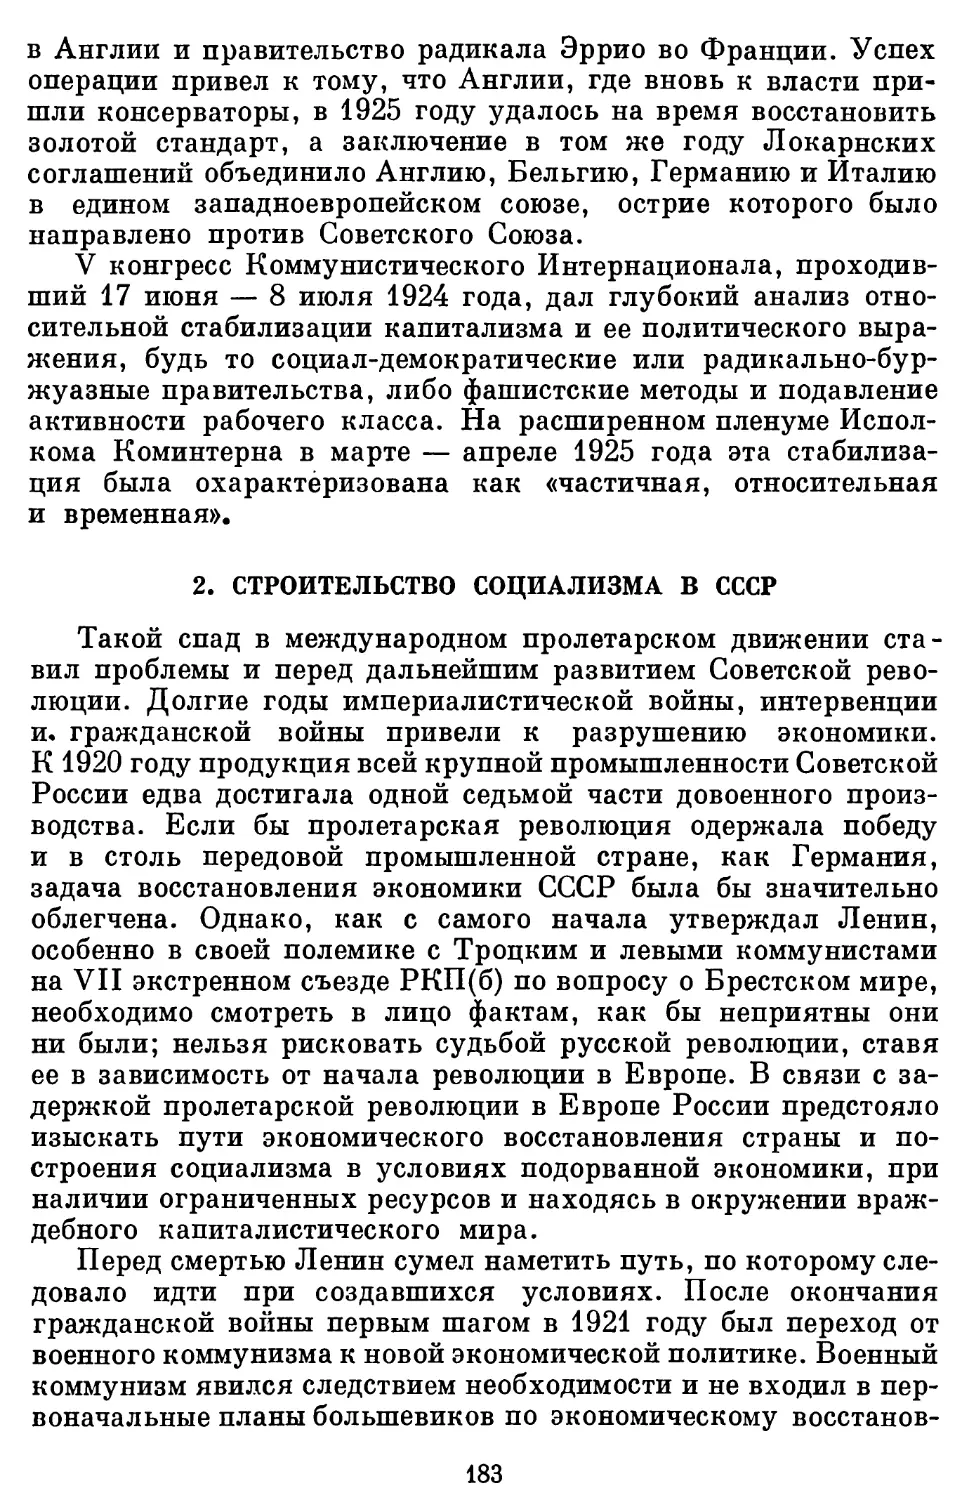 2. Строительство социализма в СССР